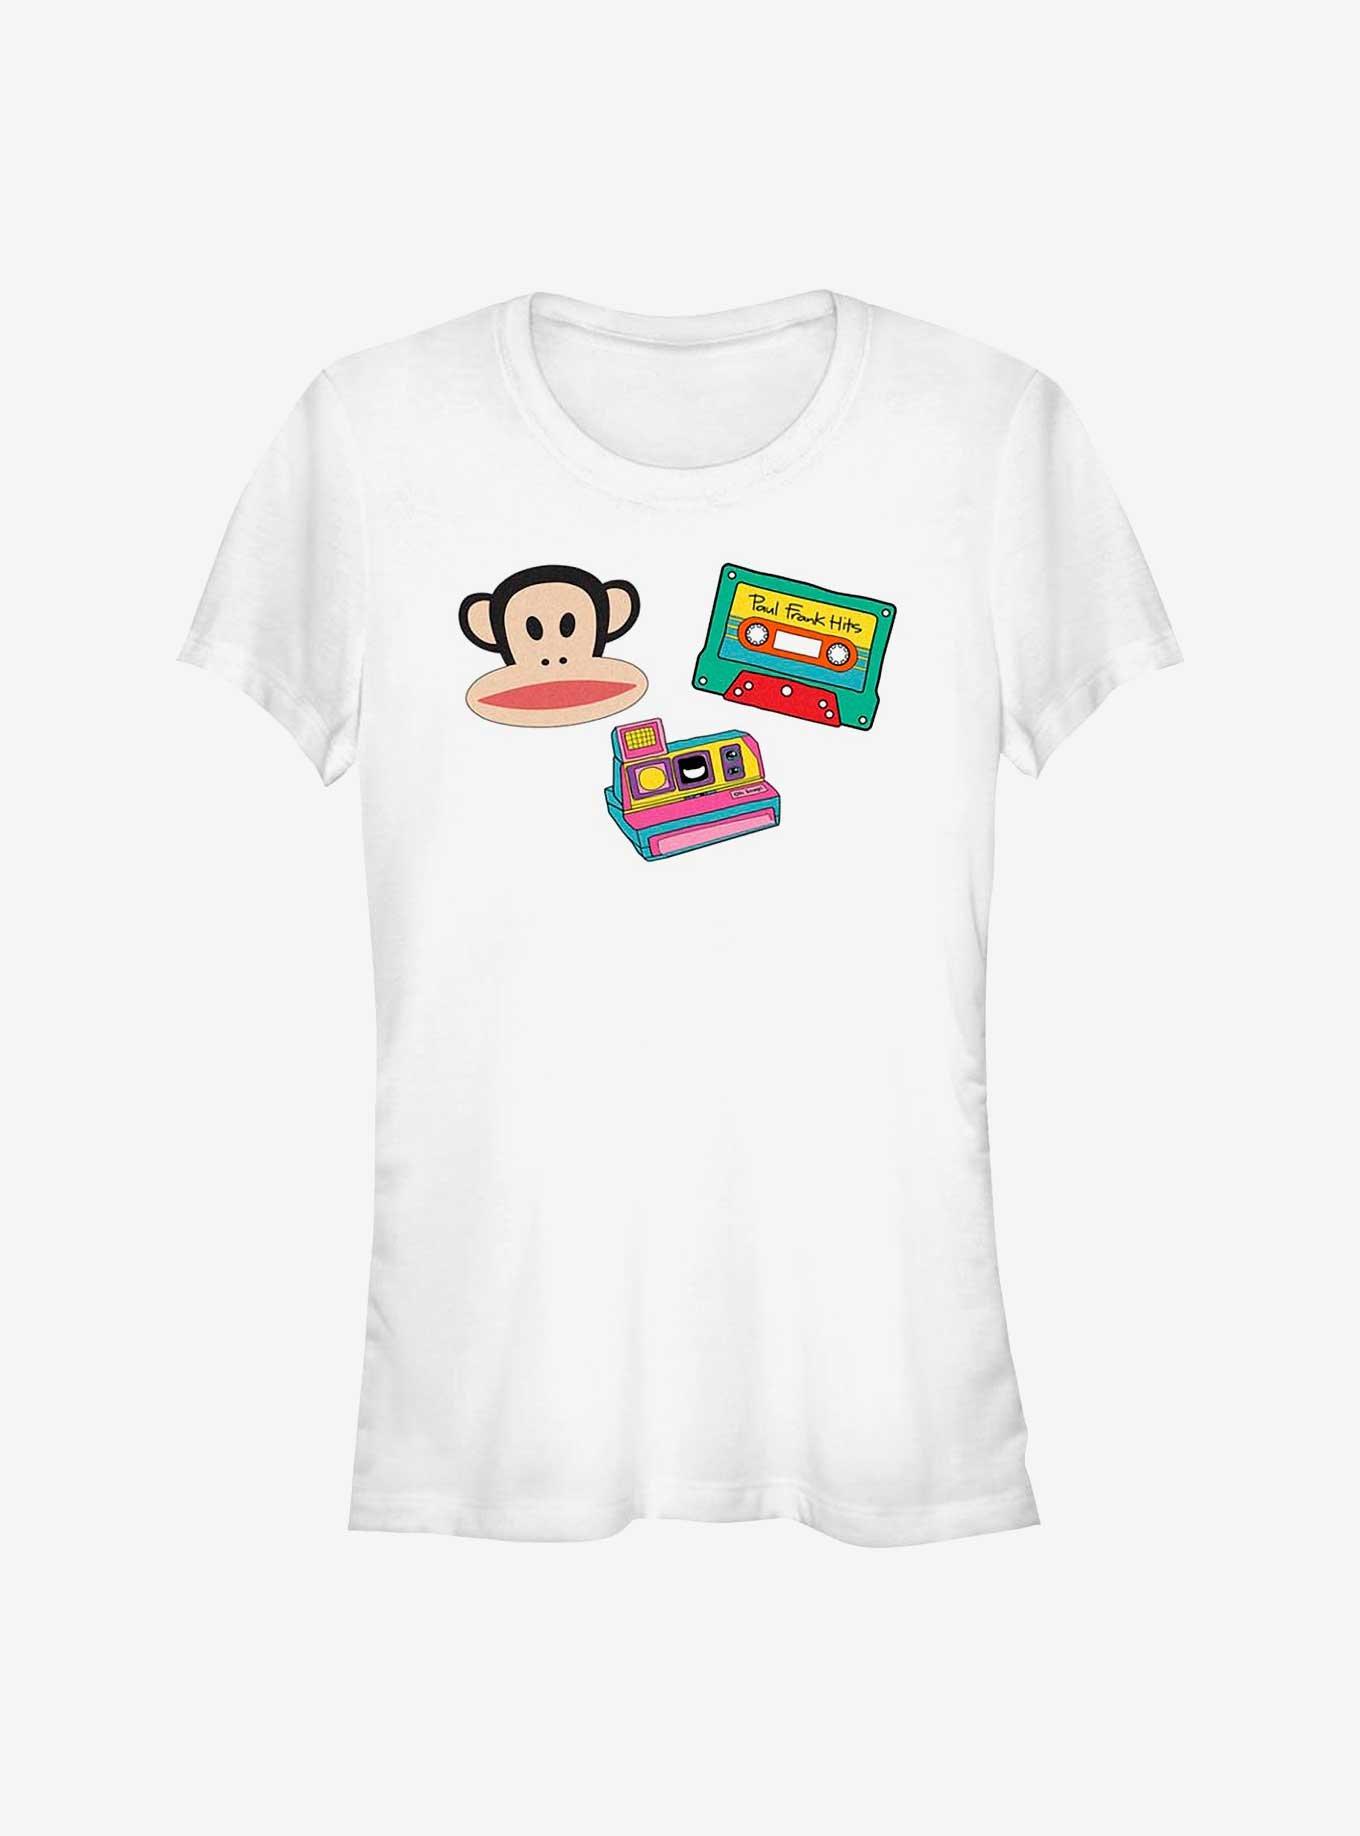 Paul Frank Staff Pick Slides Girls T-Shirt, WHITE, hi-res